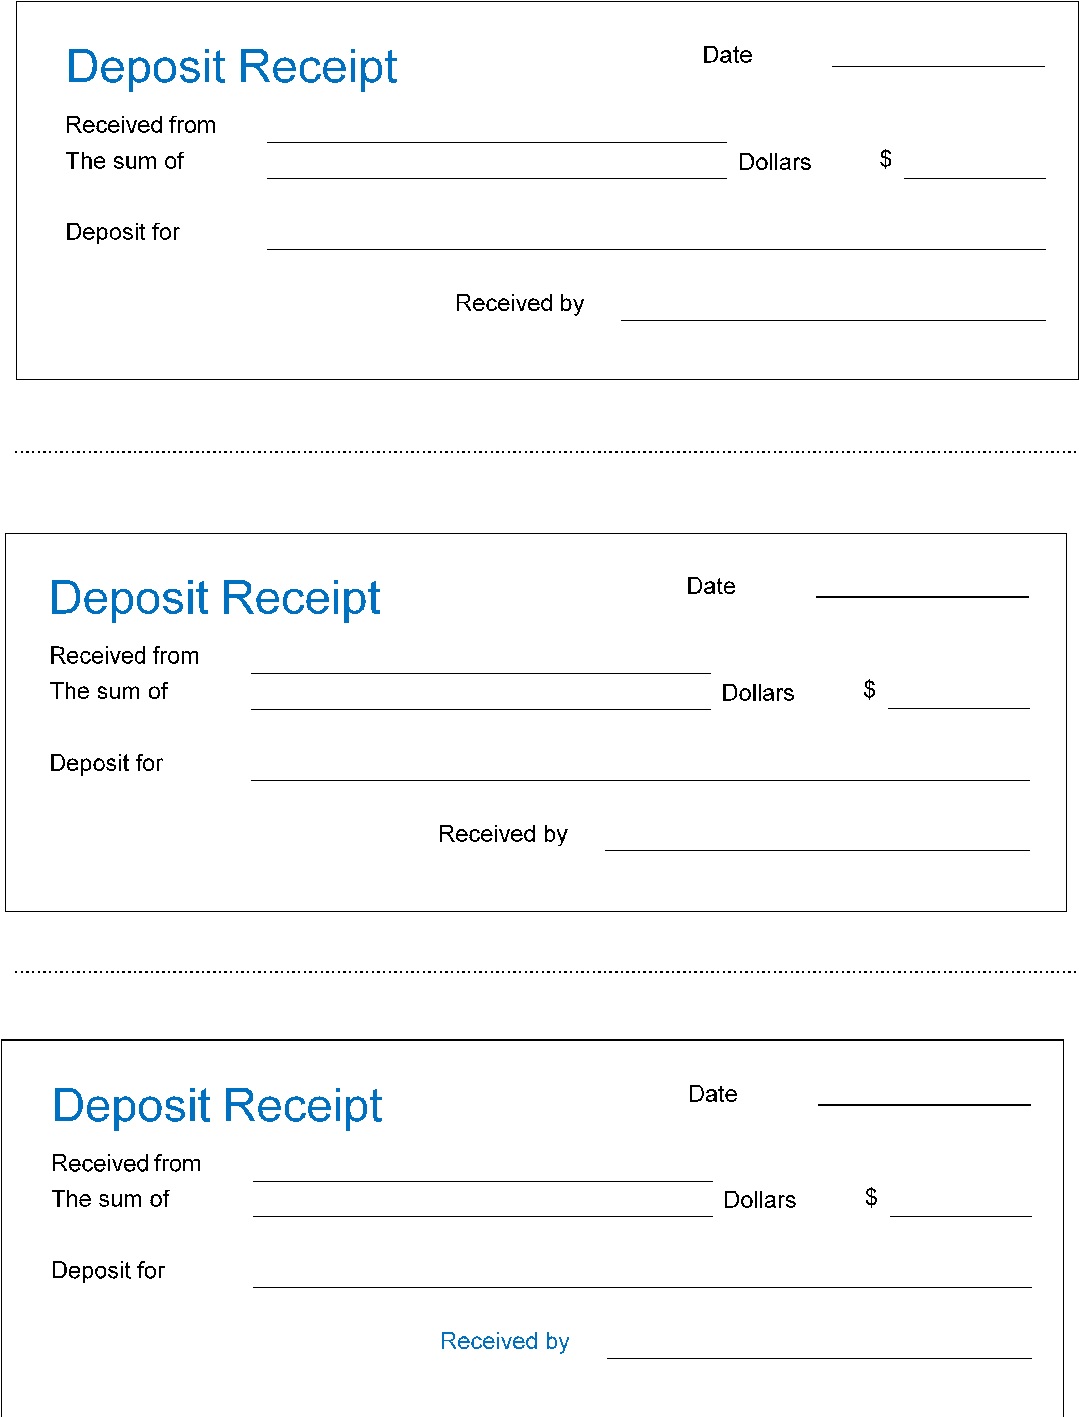 Bank Deposit Slip Templates Free Report Templates